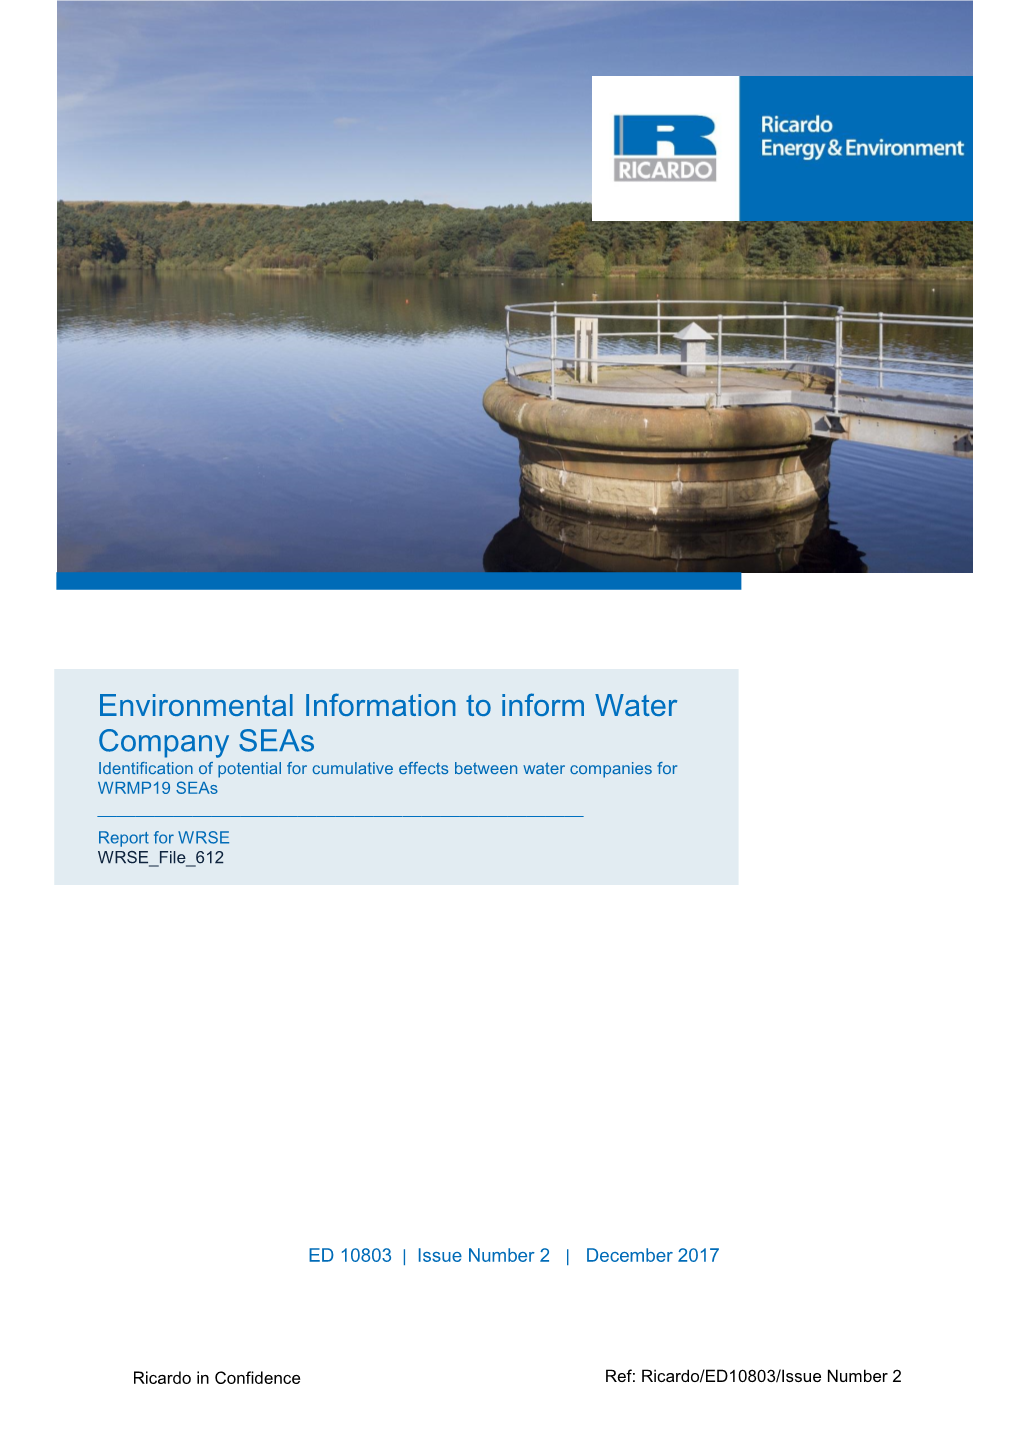 Environmental Information to Inform Water Company Seas | I